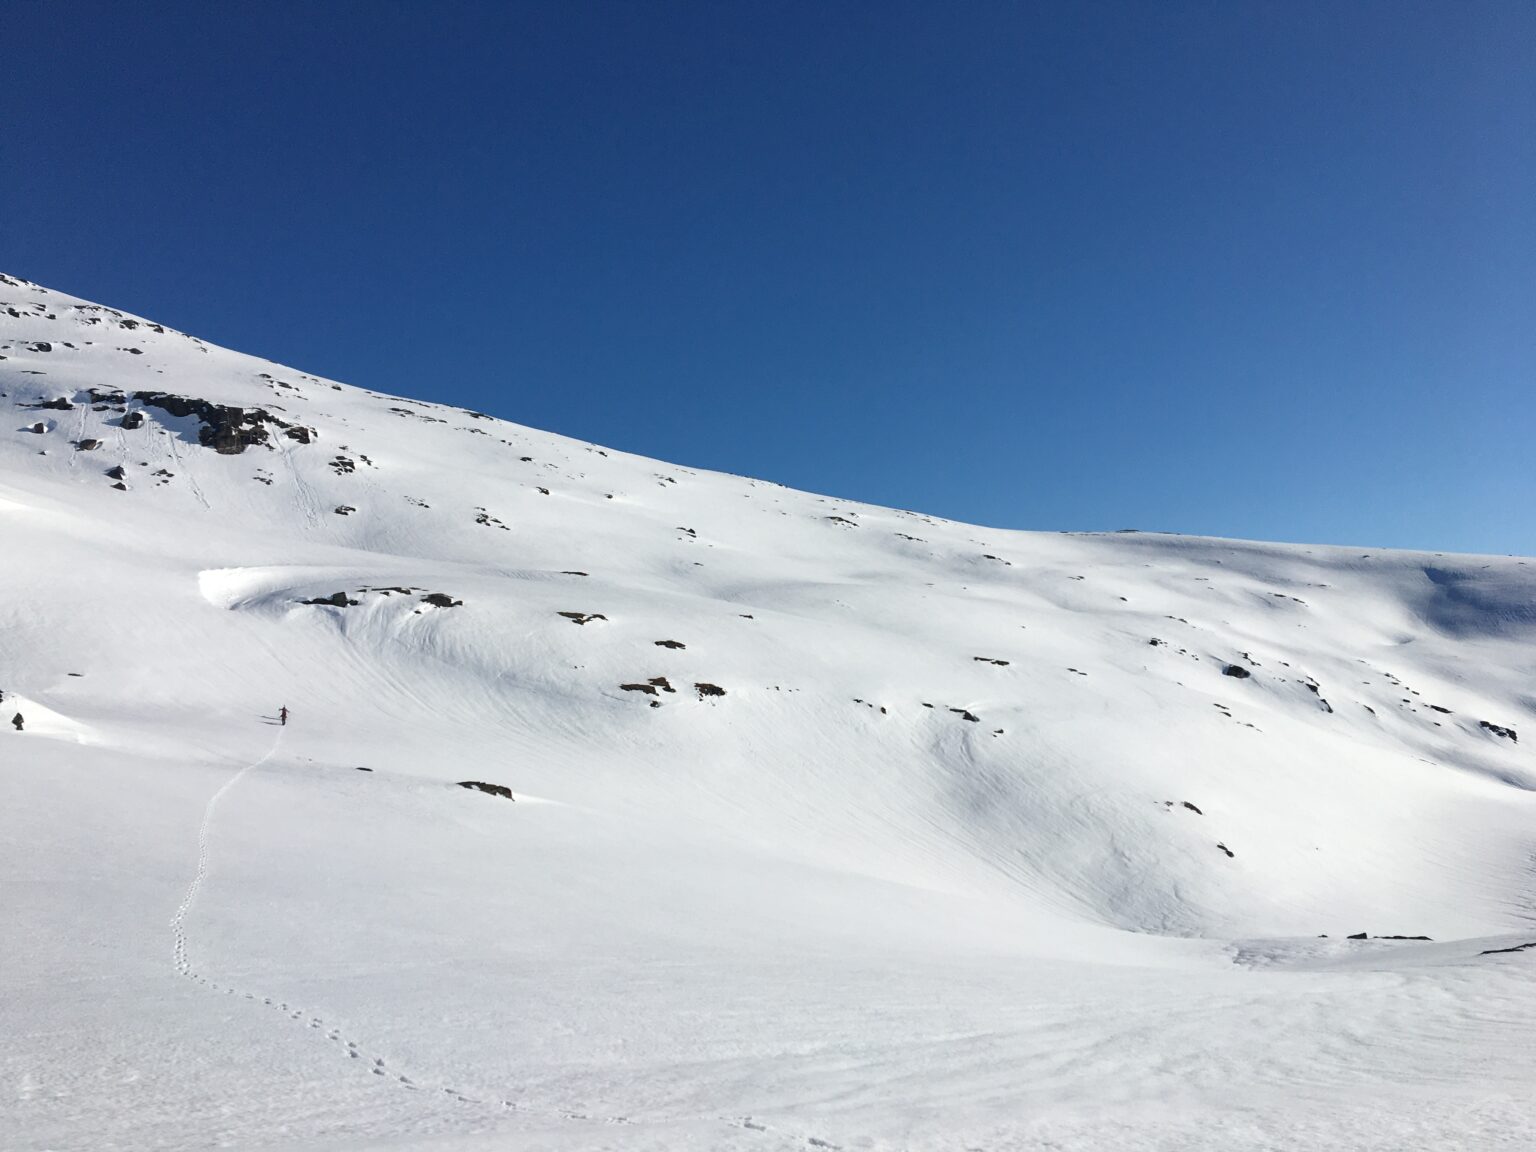 Traversing to the Southeast ridge on Blåbærfjellet in the Tamokdalen Valley